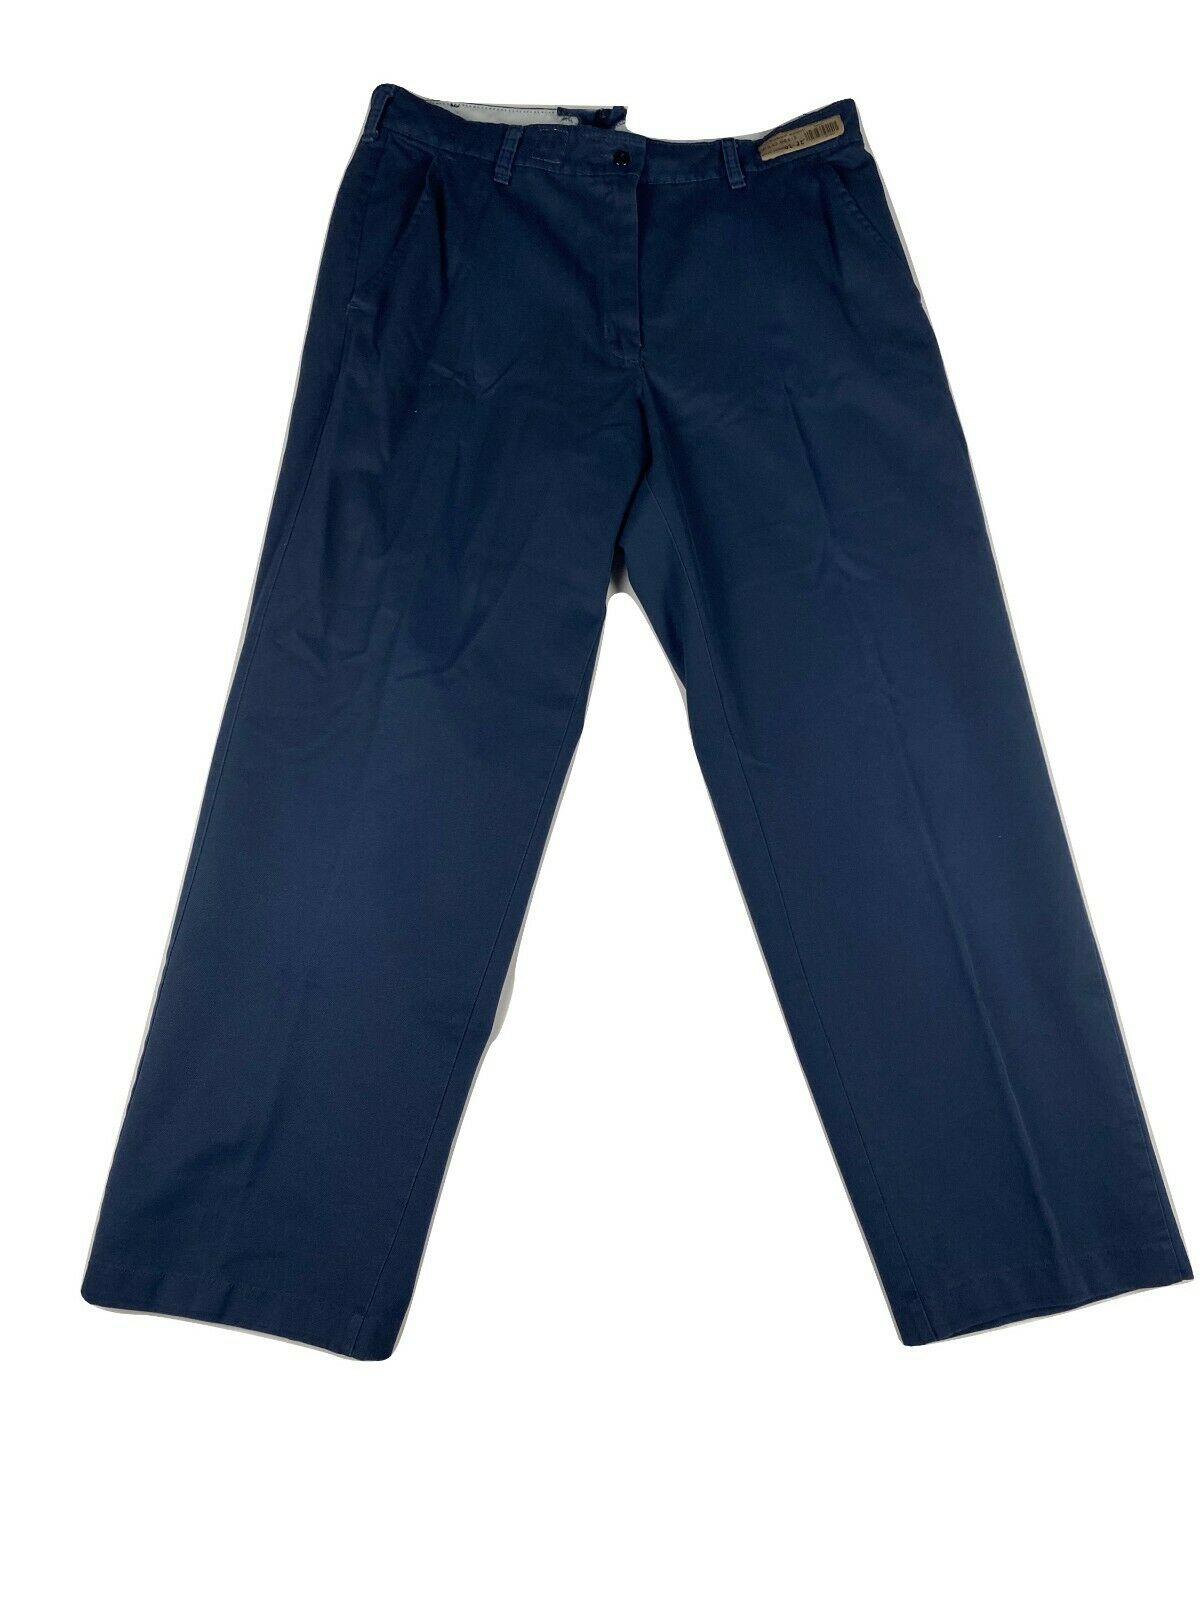 Navy Blue Work Pants - Red Kap, Cintas, Unifirst Used Uniform High Quality Clean